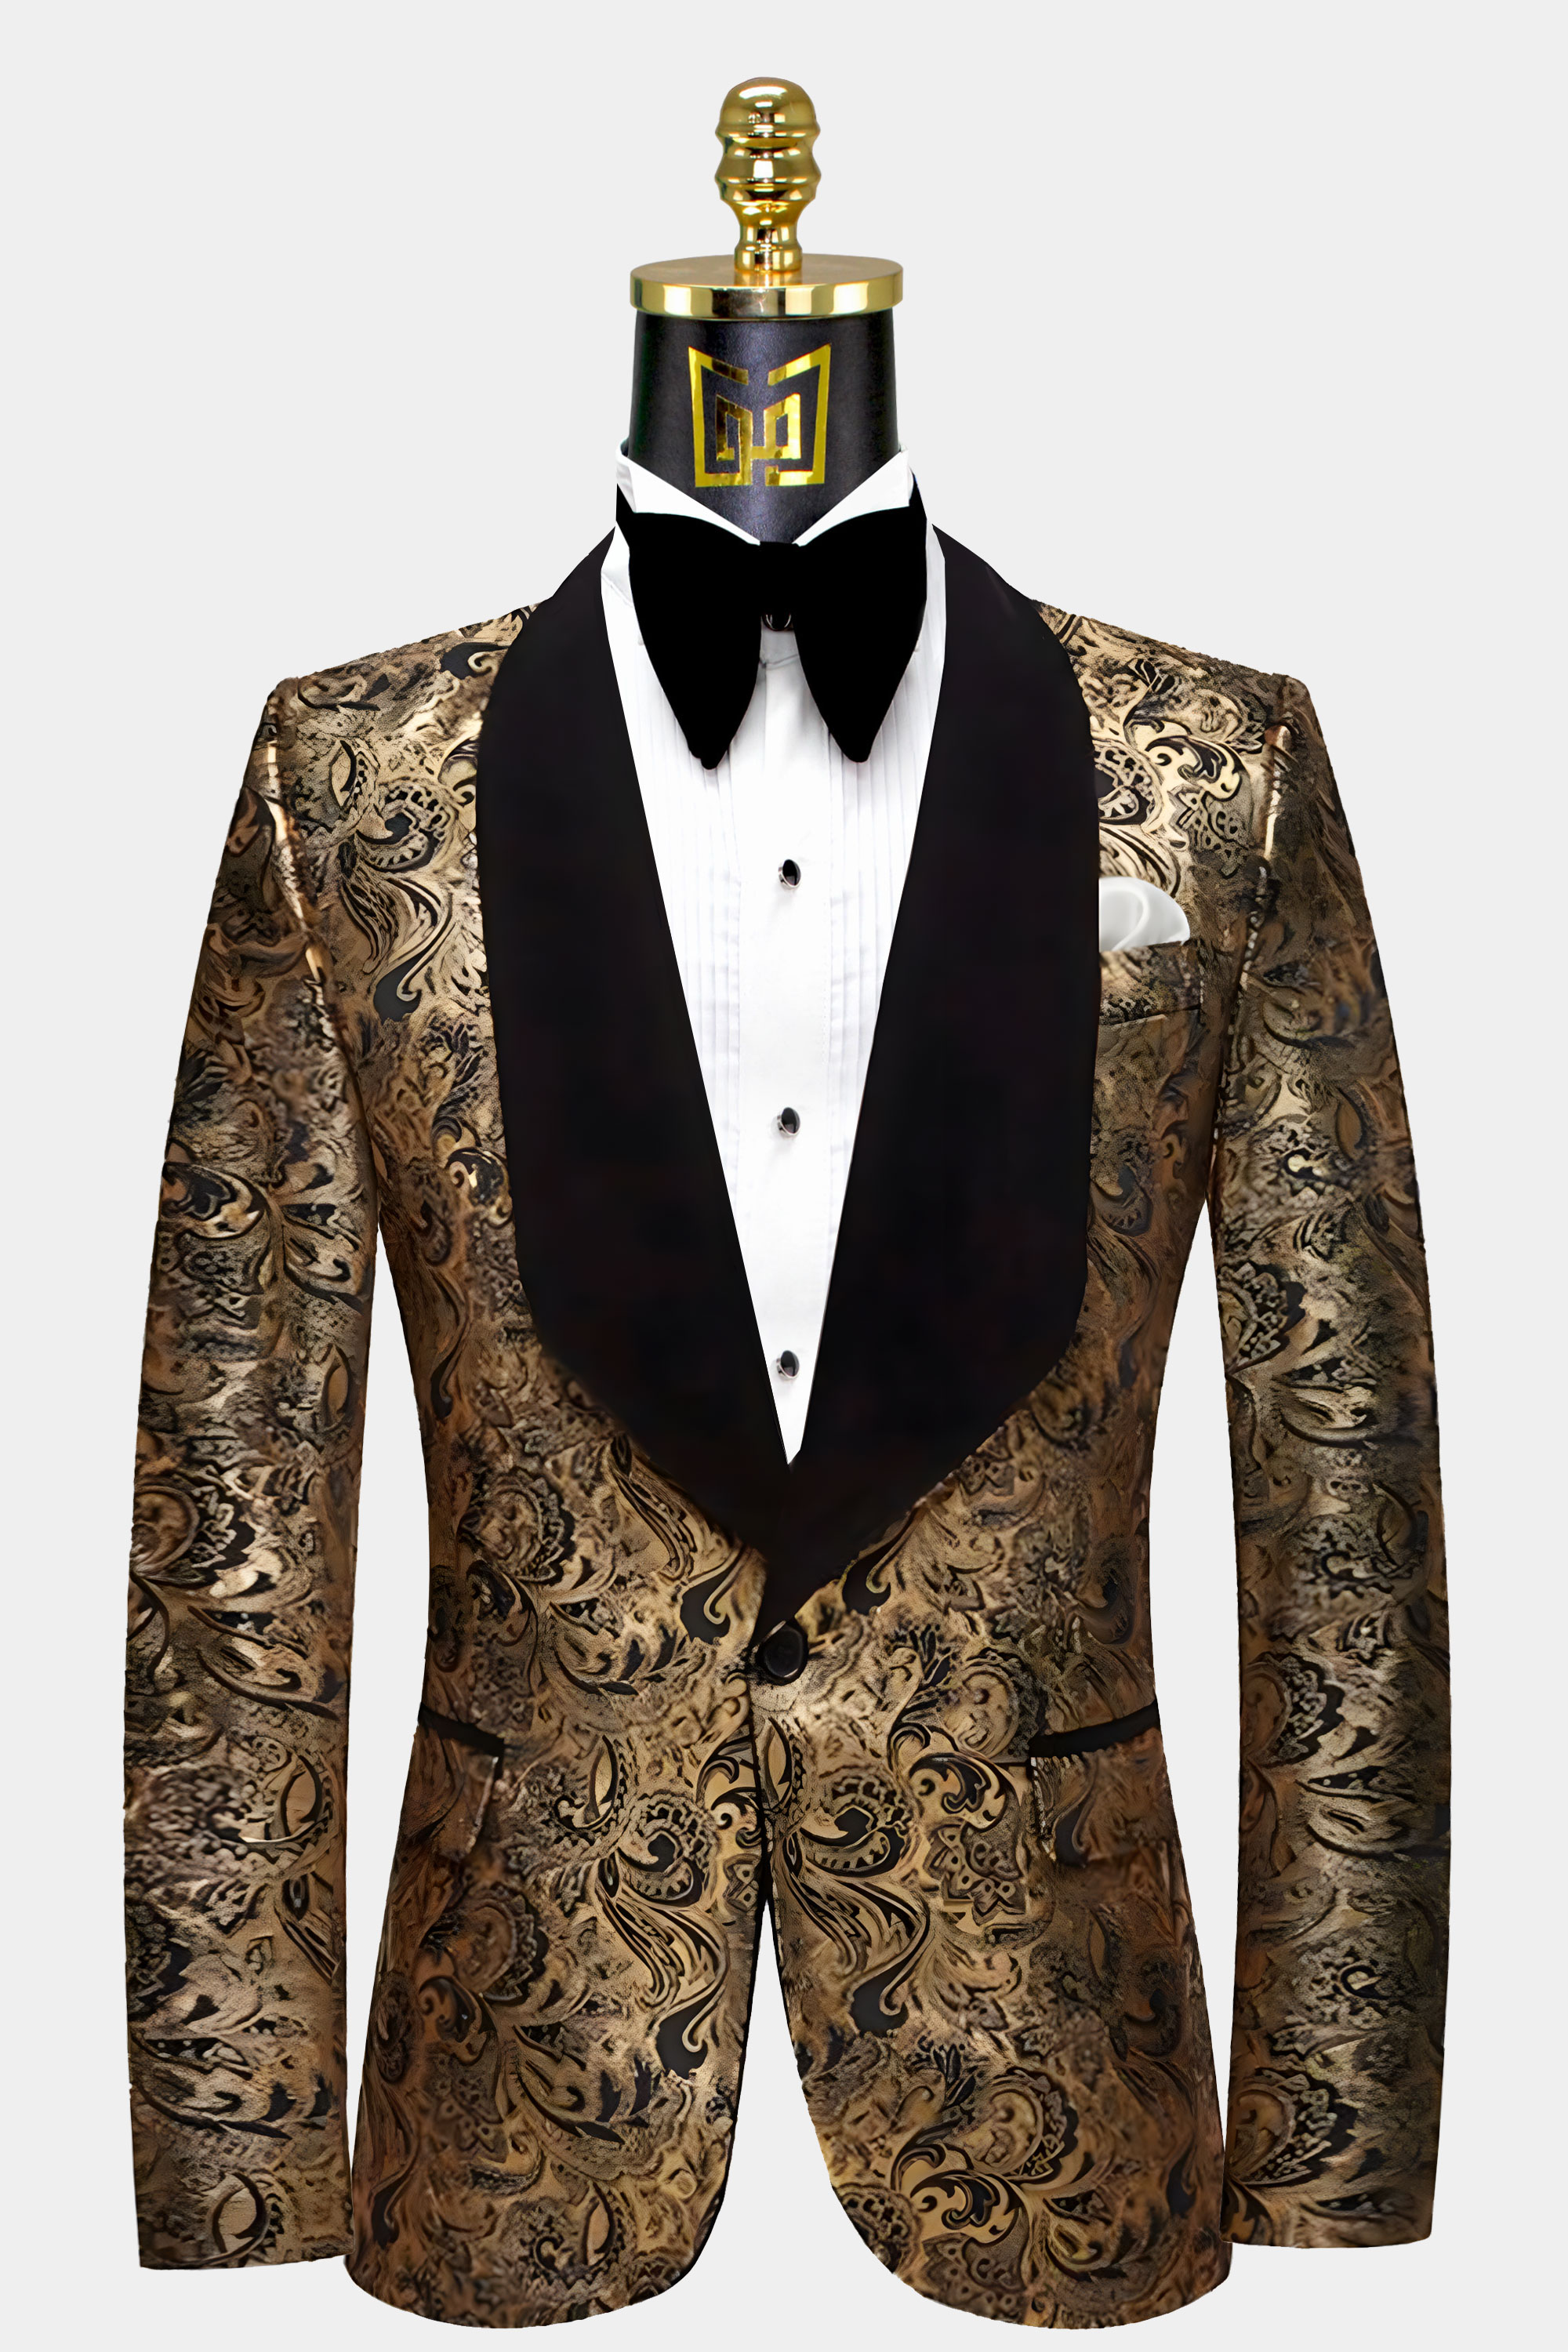 Mens-Black-and-Gold-Paisley-Tuxedo-Jacket-Wedding-Groom-Blazer-For-Prom-Suit-from-Gentlemansguru.com